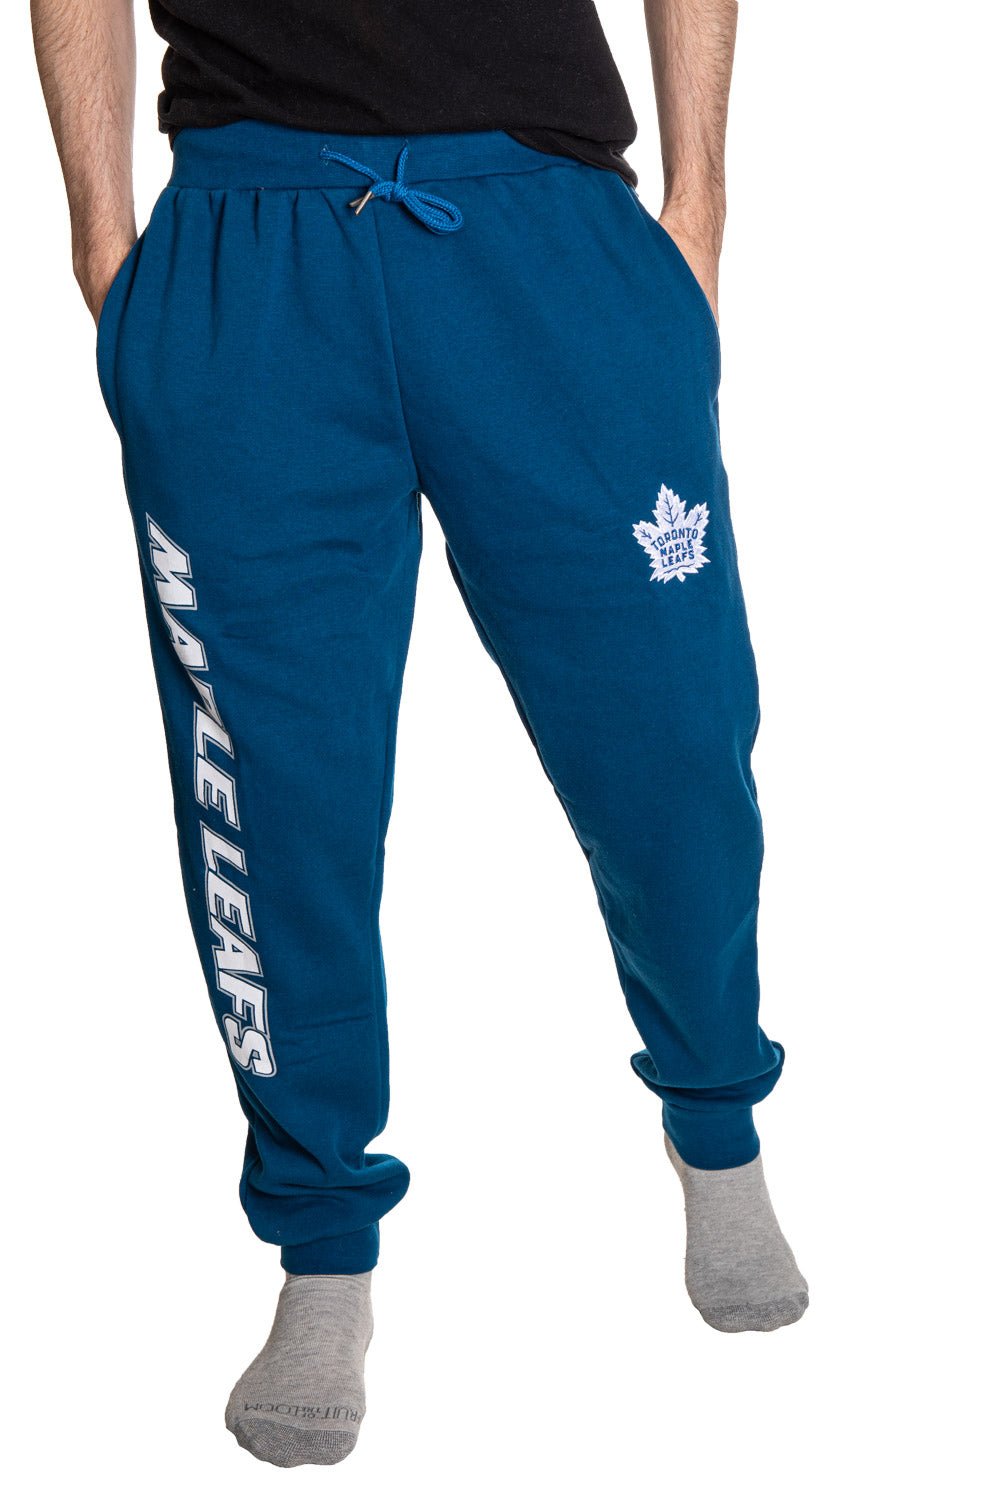 Calhoun Mens Licensed NHL Jogger Style Sweatpants